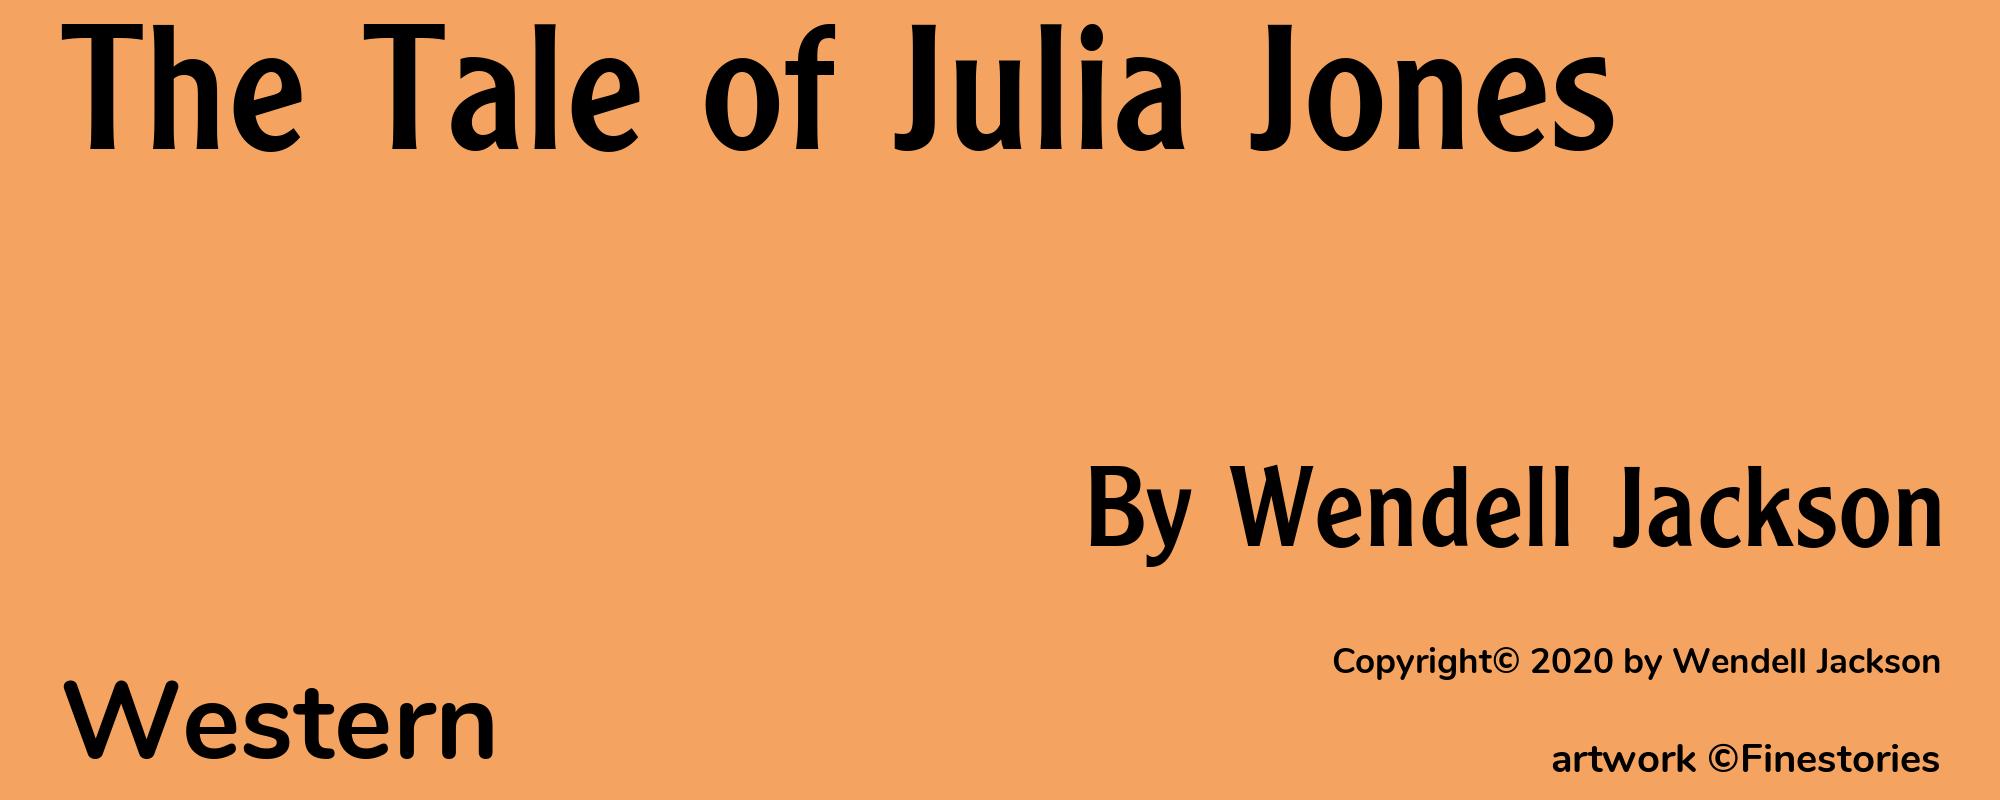 The Tale of Julia Jones - Cover